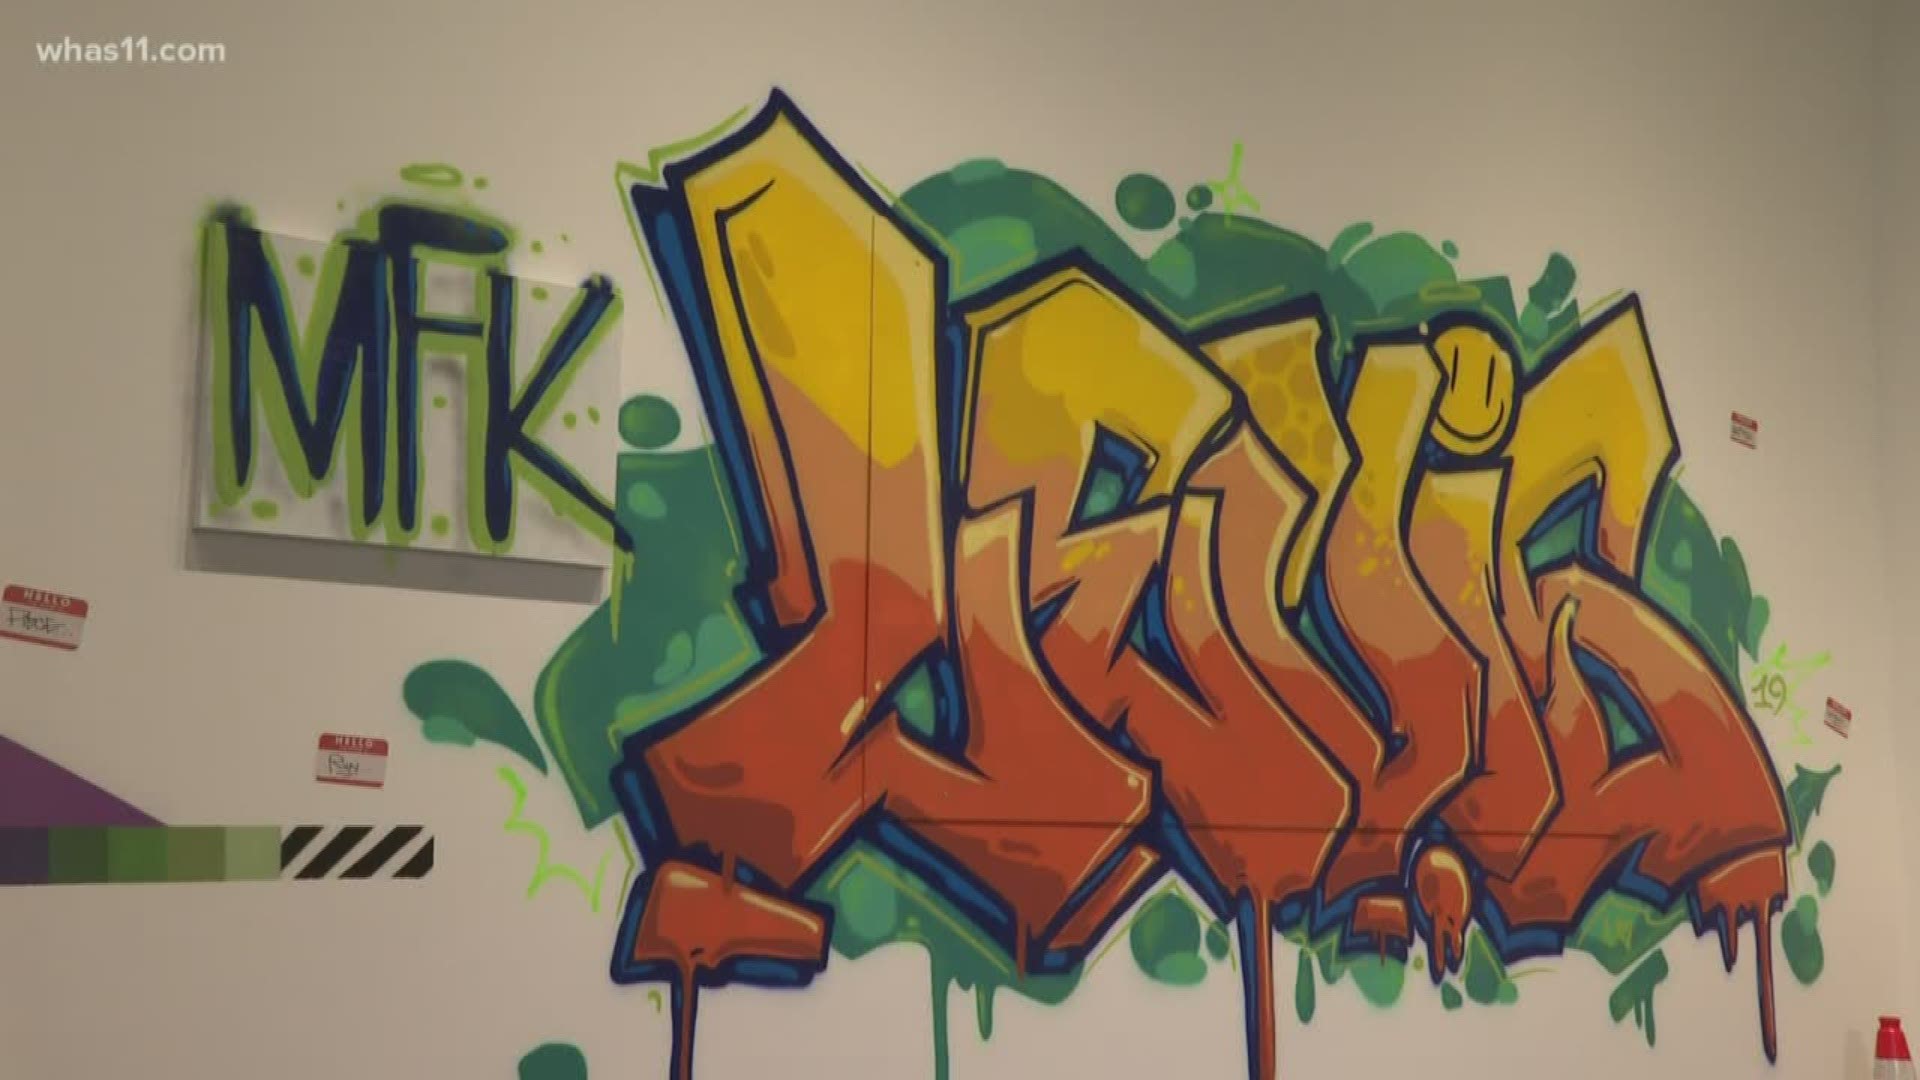 Graffiti art exhibit aims to enlighten public on culture, history